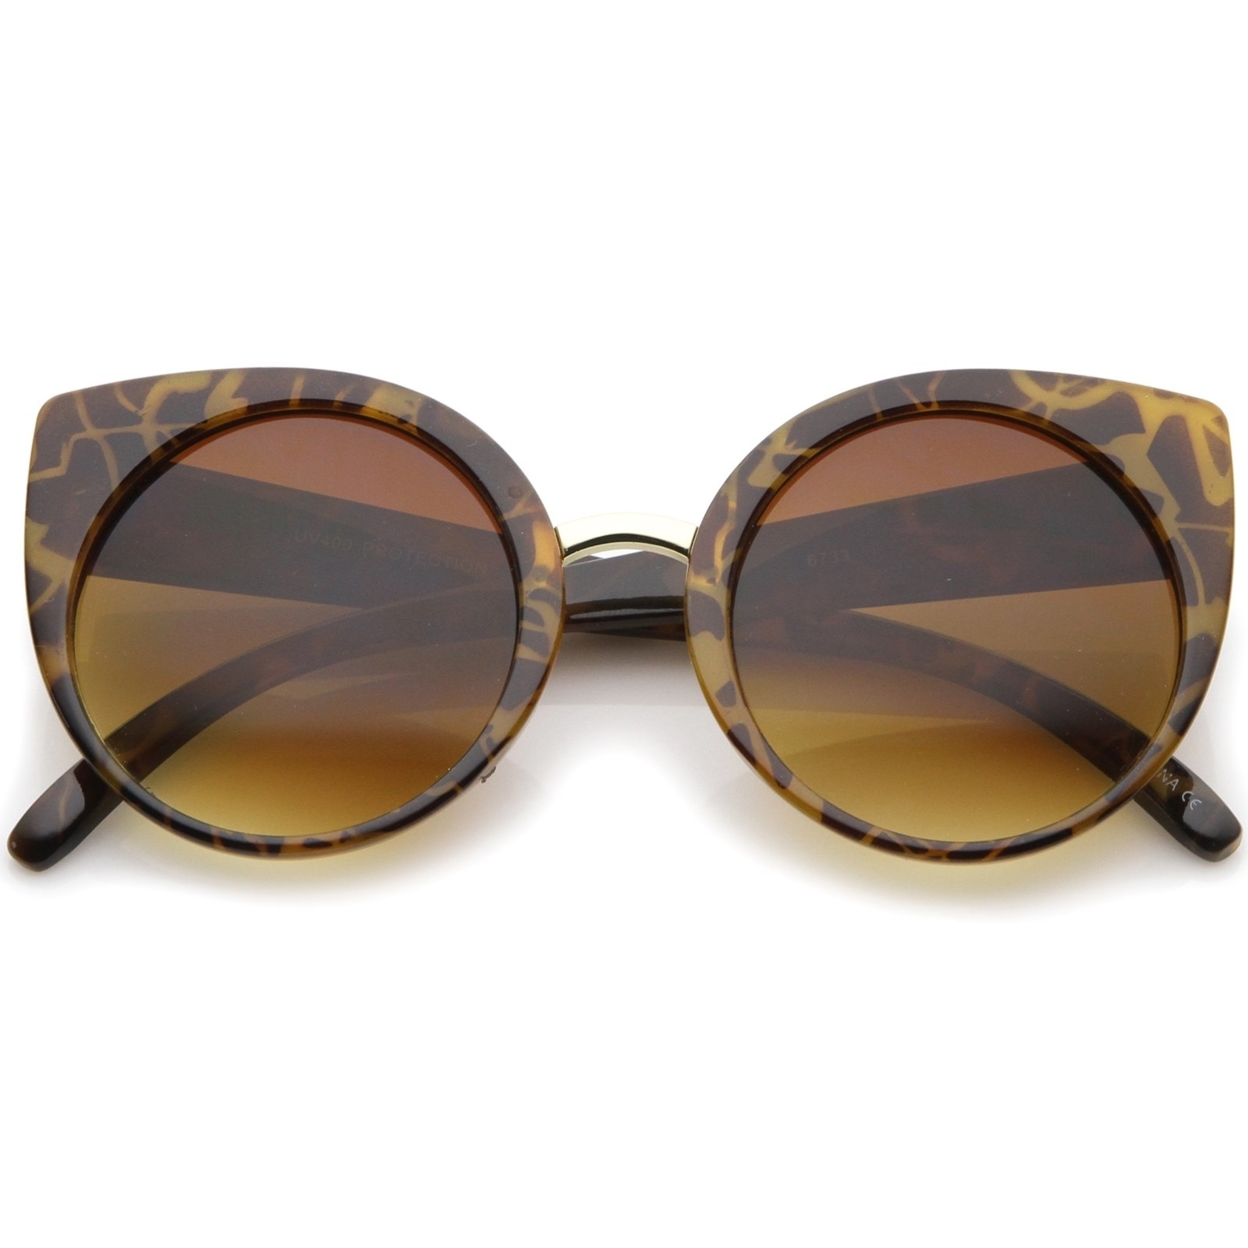 Women's High Fashion Oversize Round Lens Cat Eye Sunglasses 55mm - Tortoise-Gold / Amber